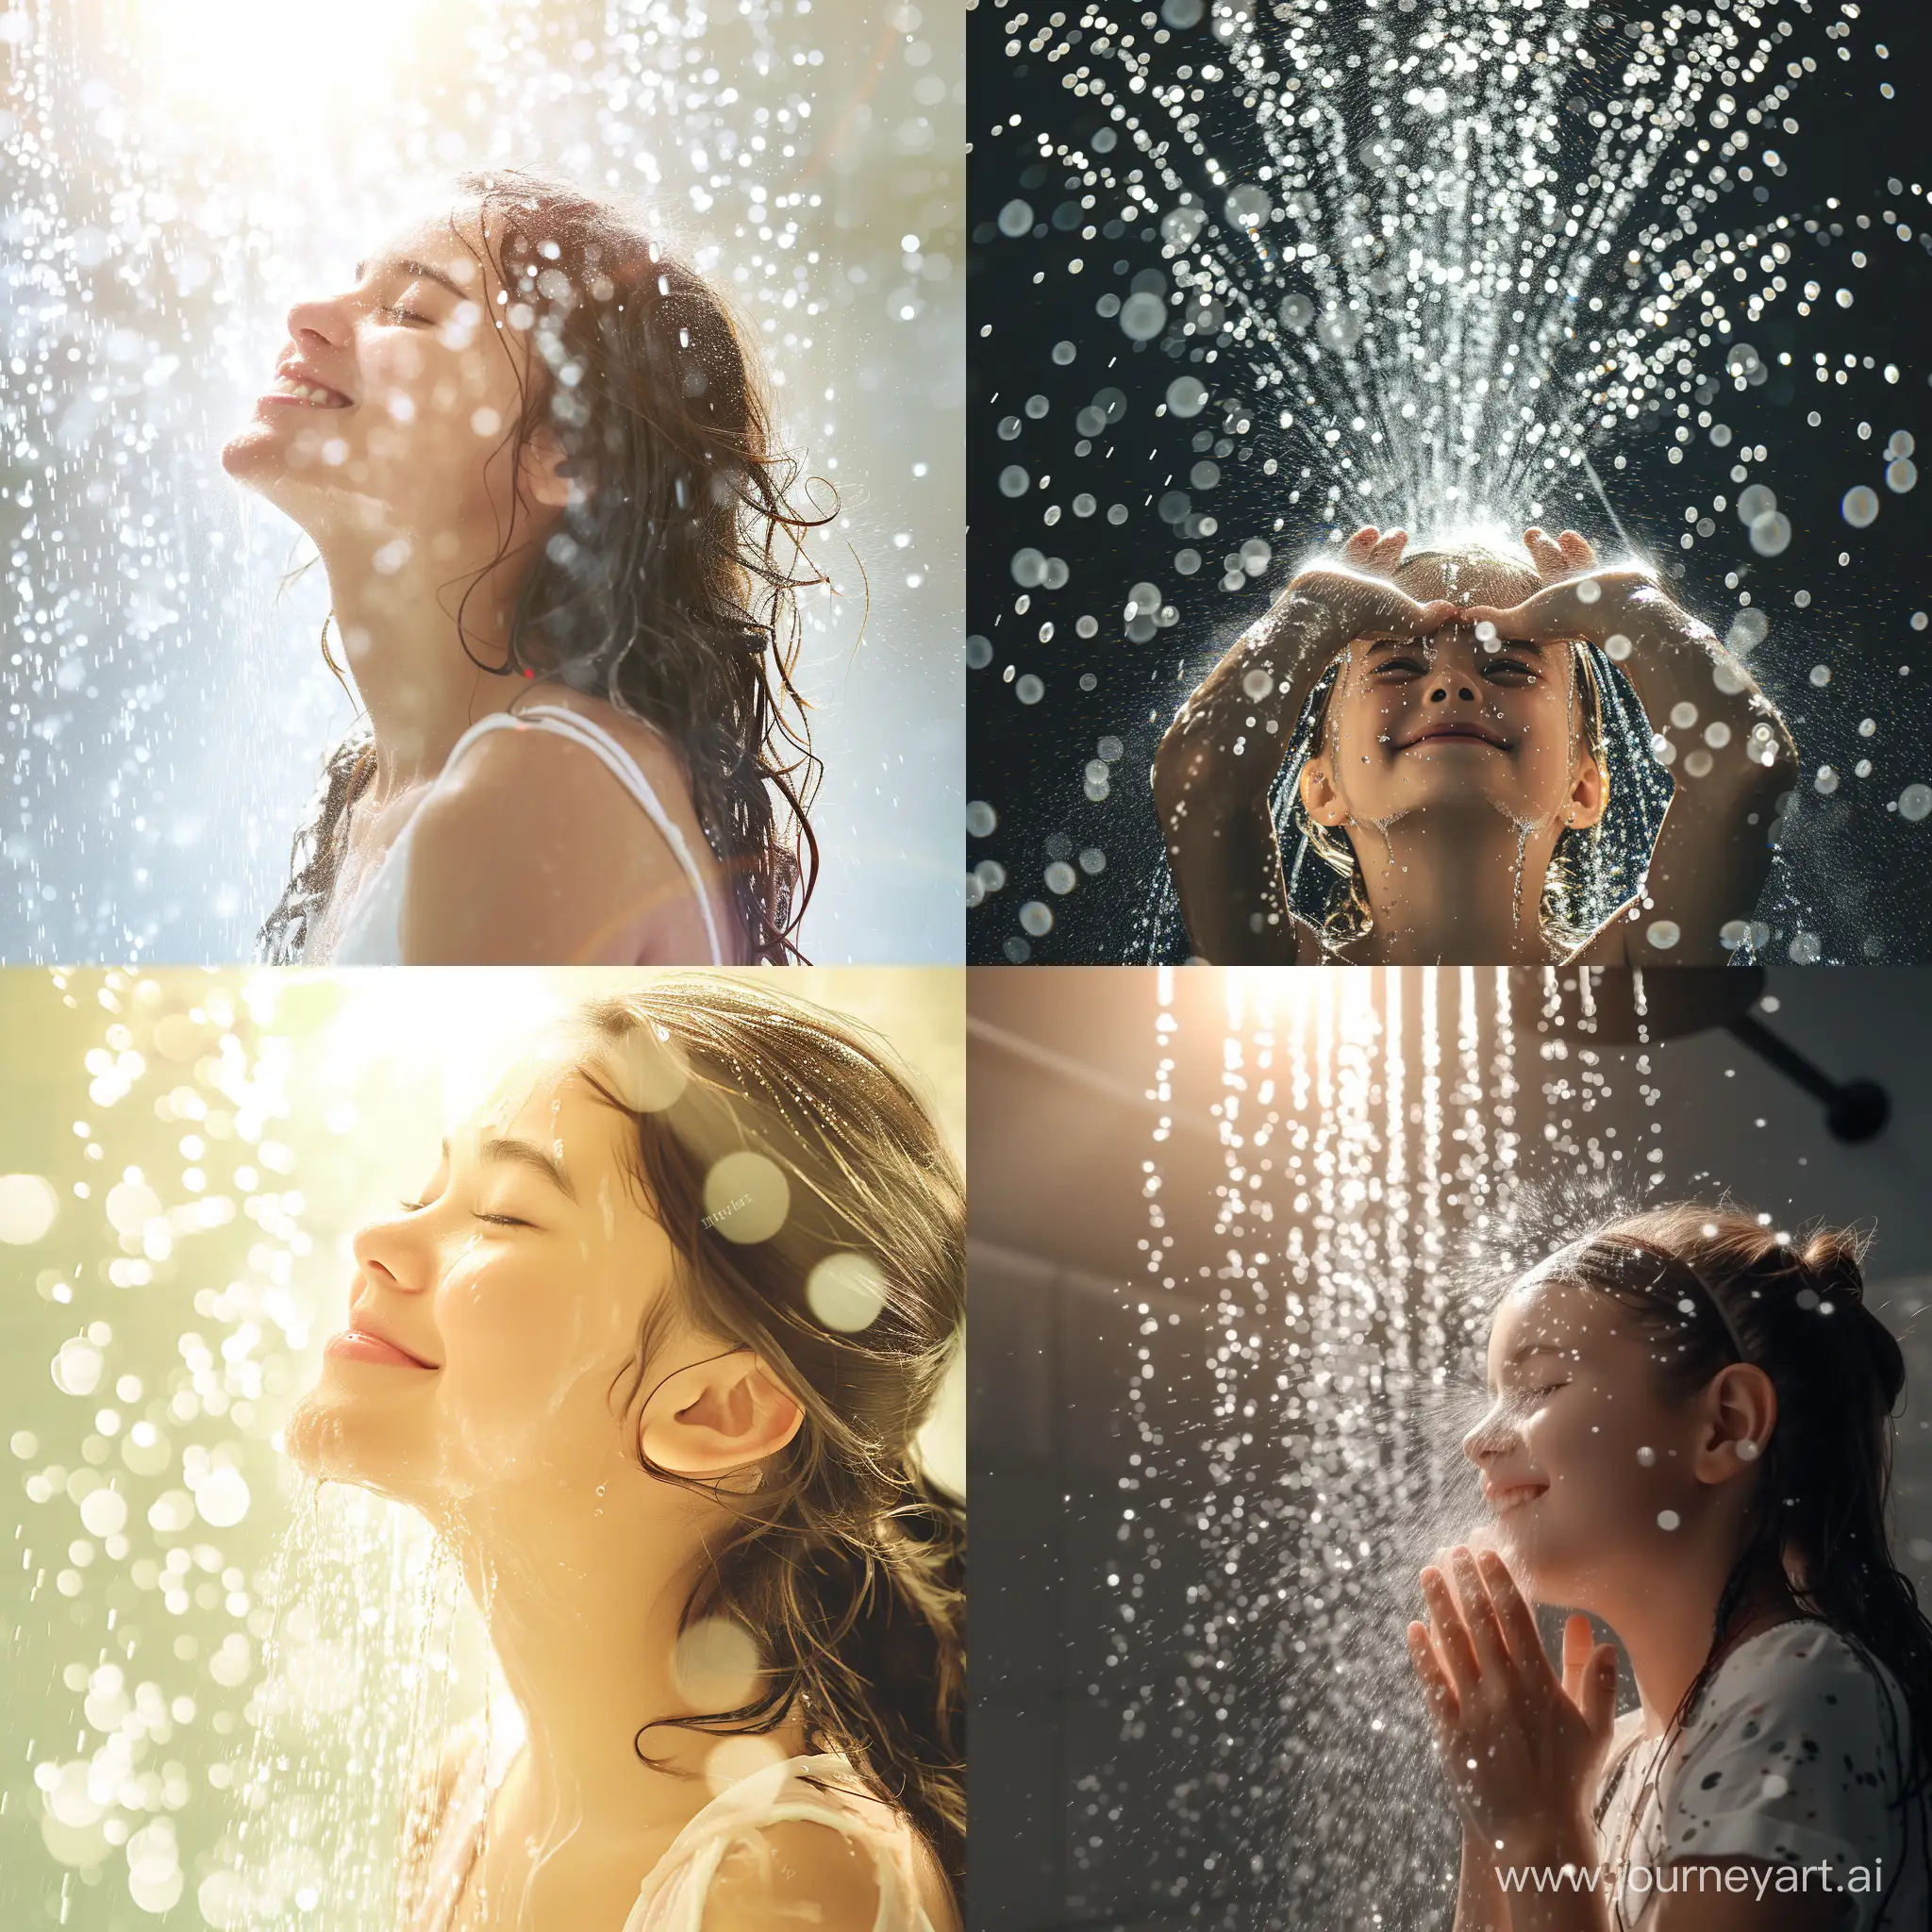 Joyful-Shower-Bliss-Hyperrealistic-Bathing-Delight-in-High-Resolution